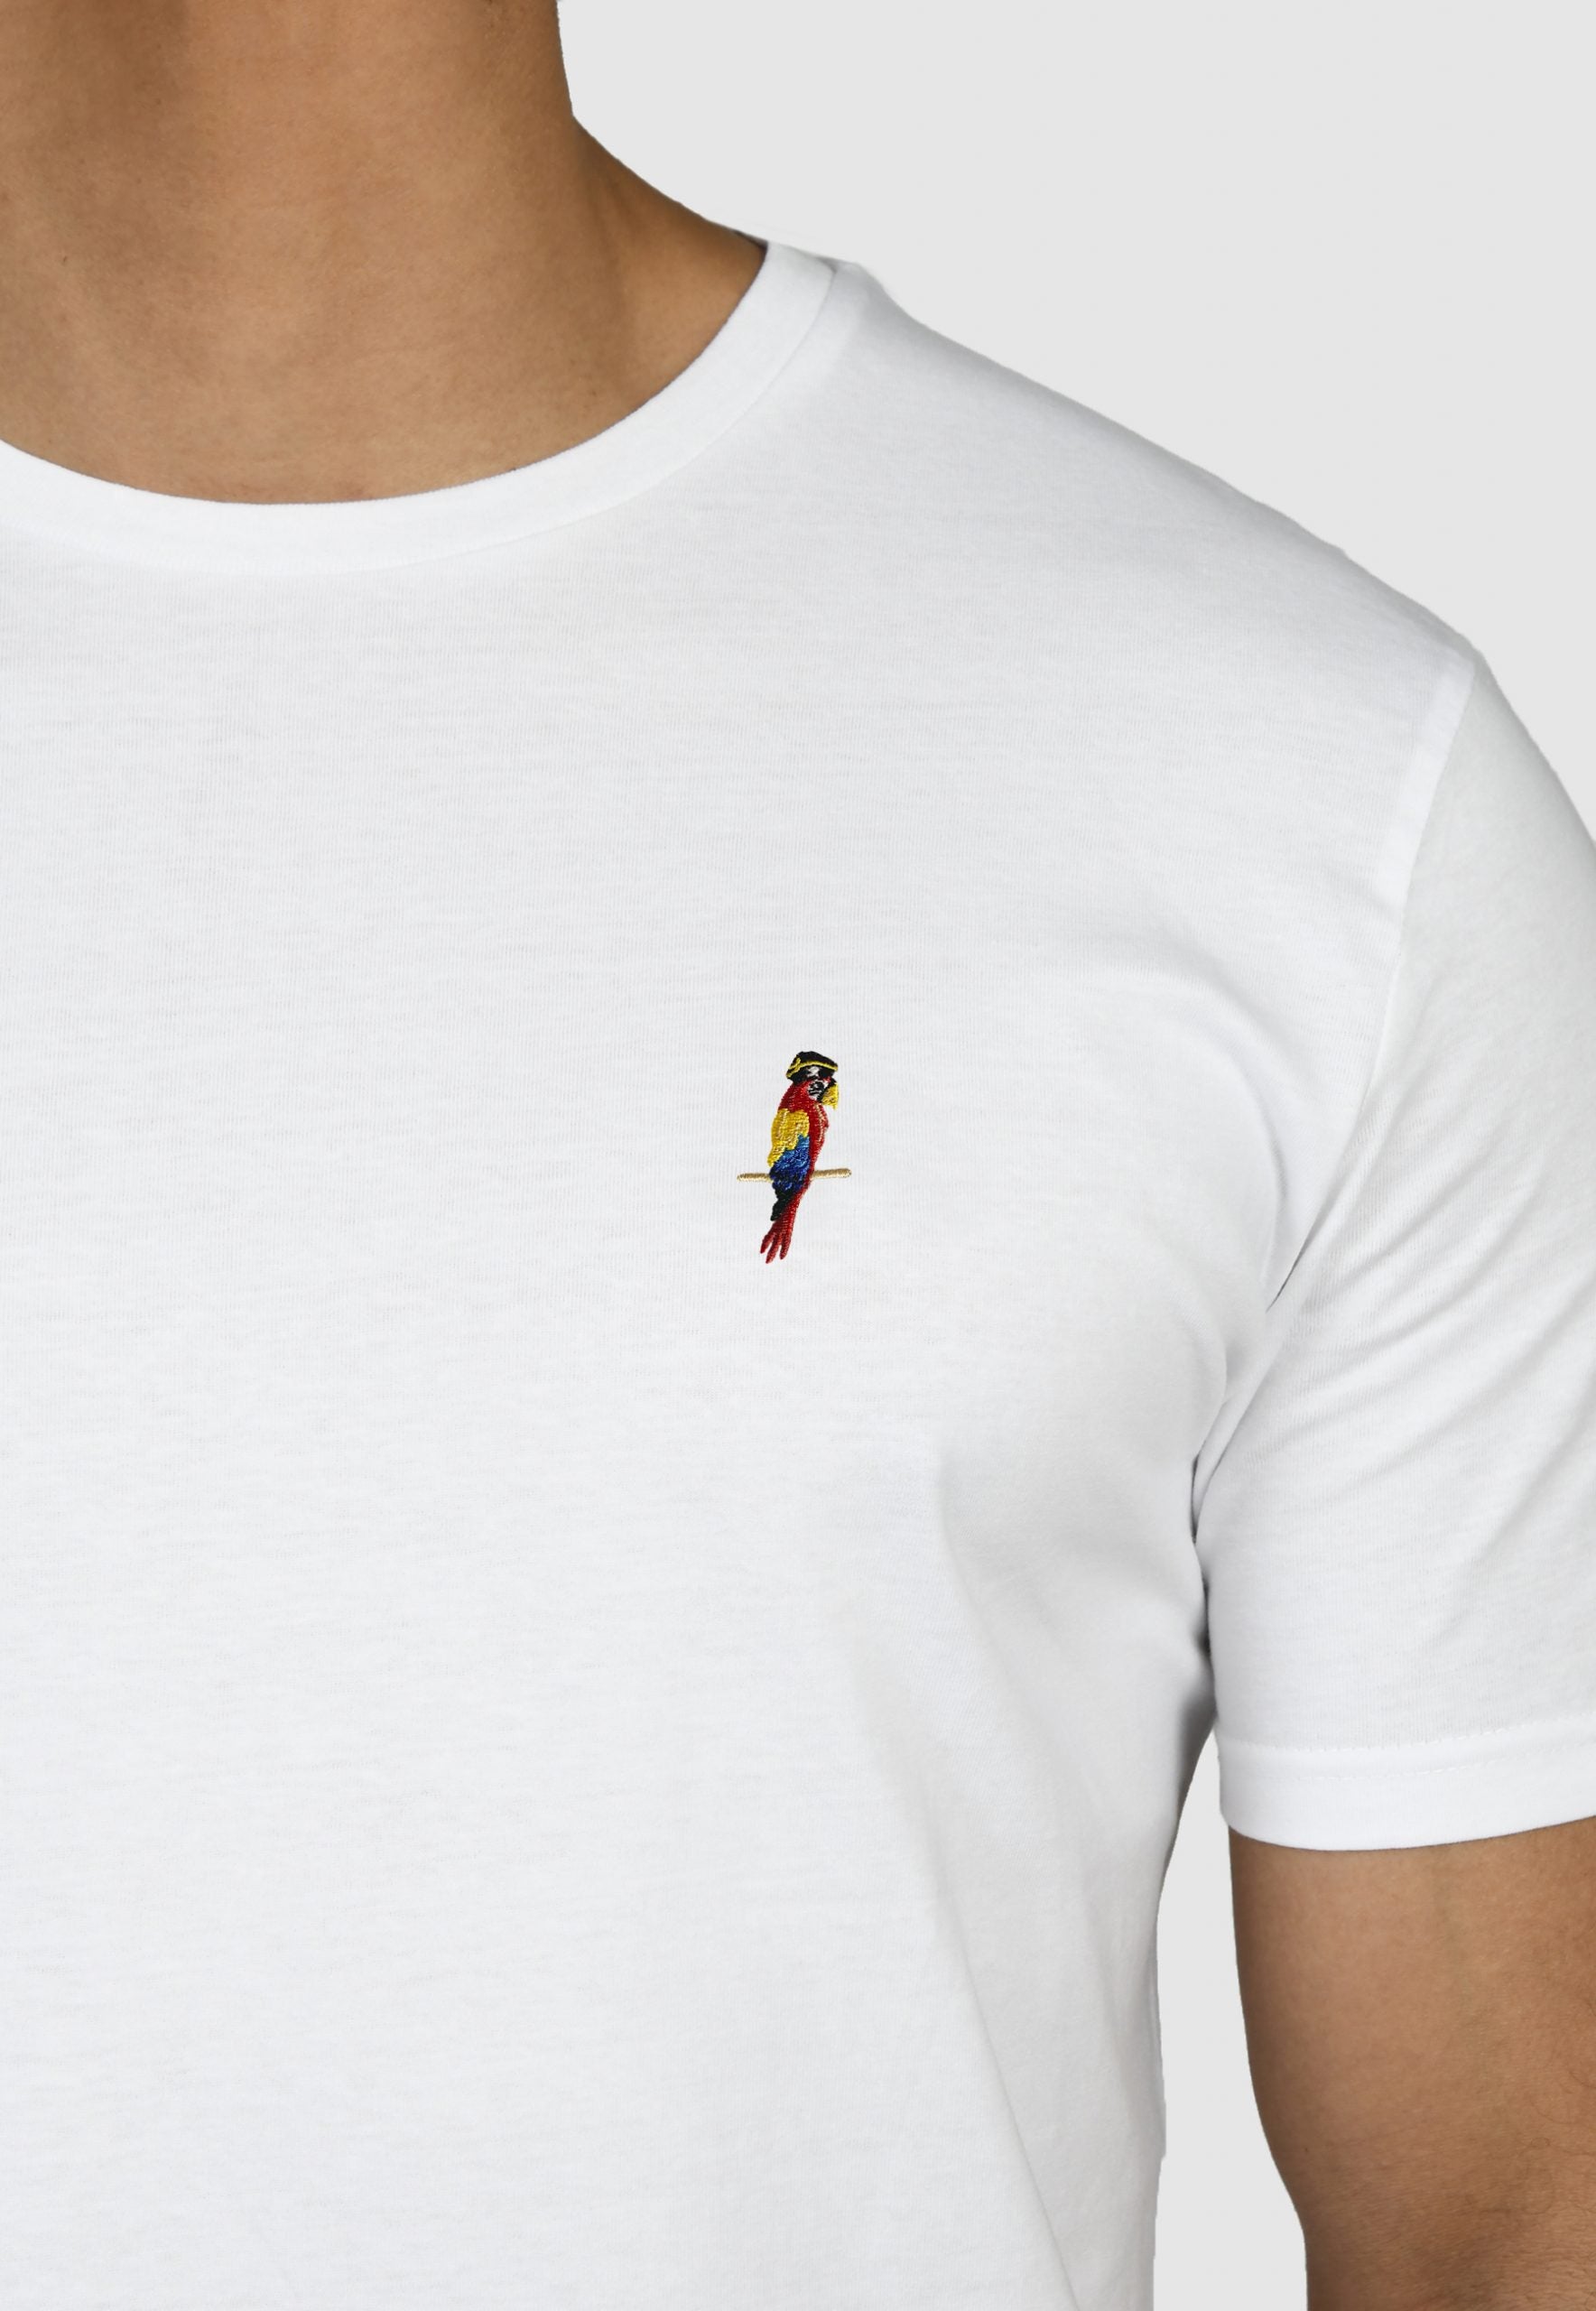 Parrot Swim Trunks and T-shirt Bundle